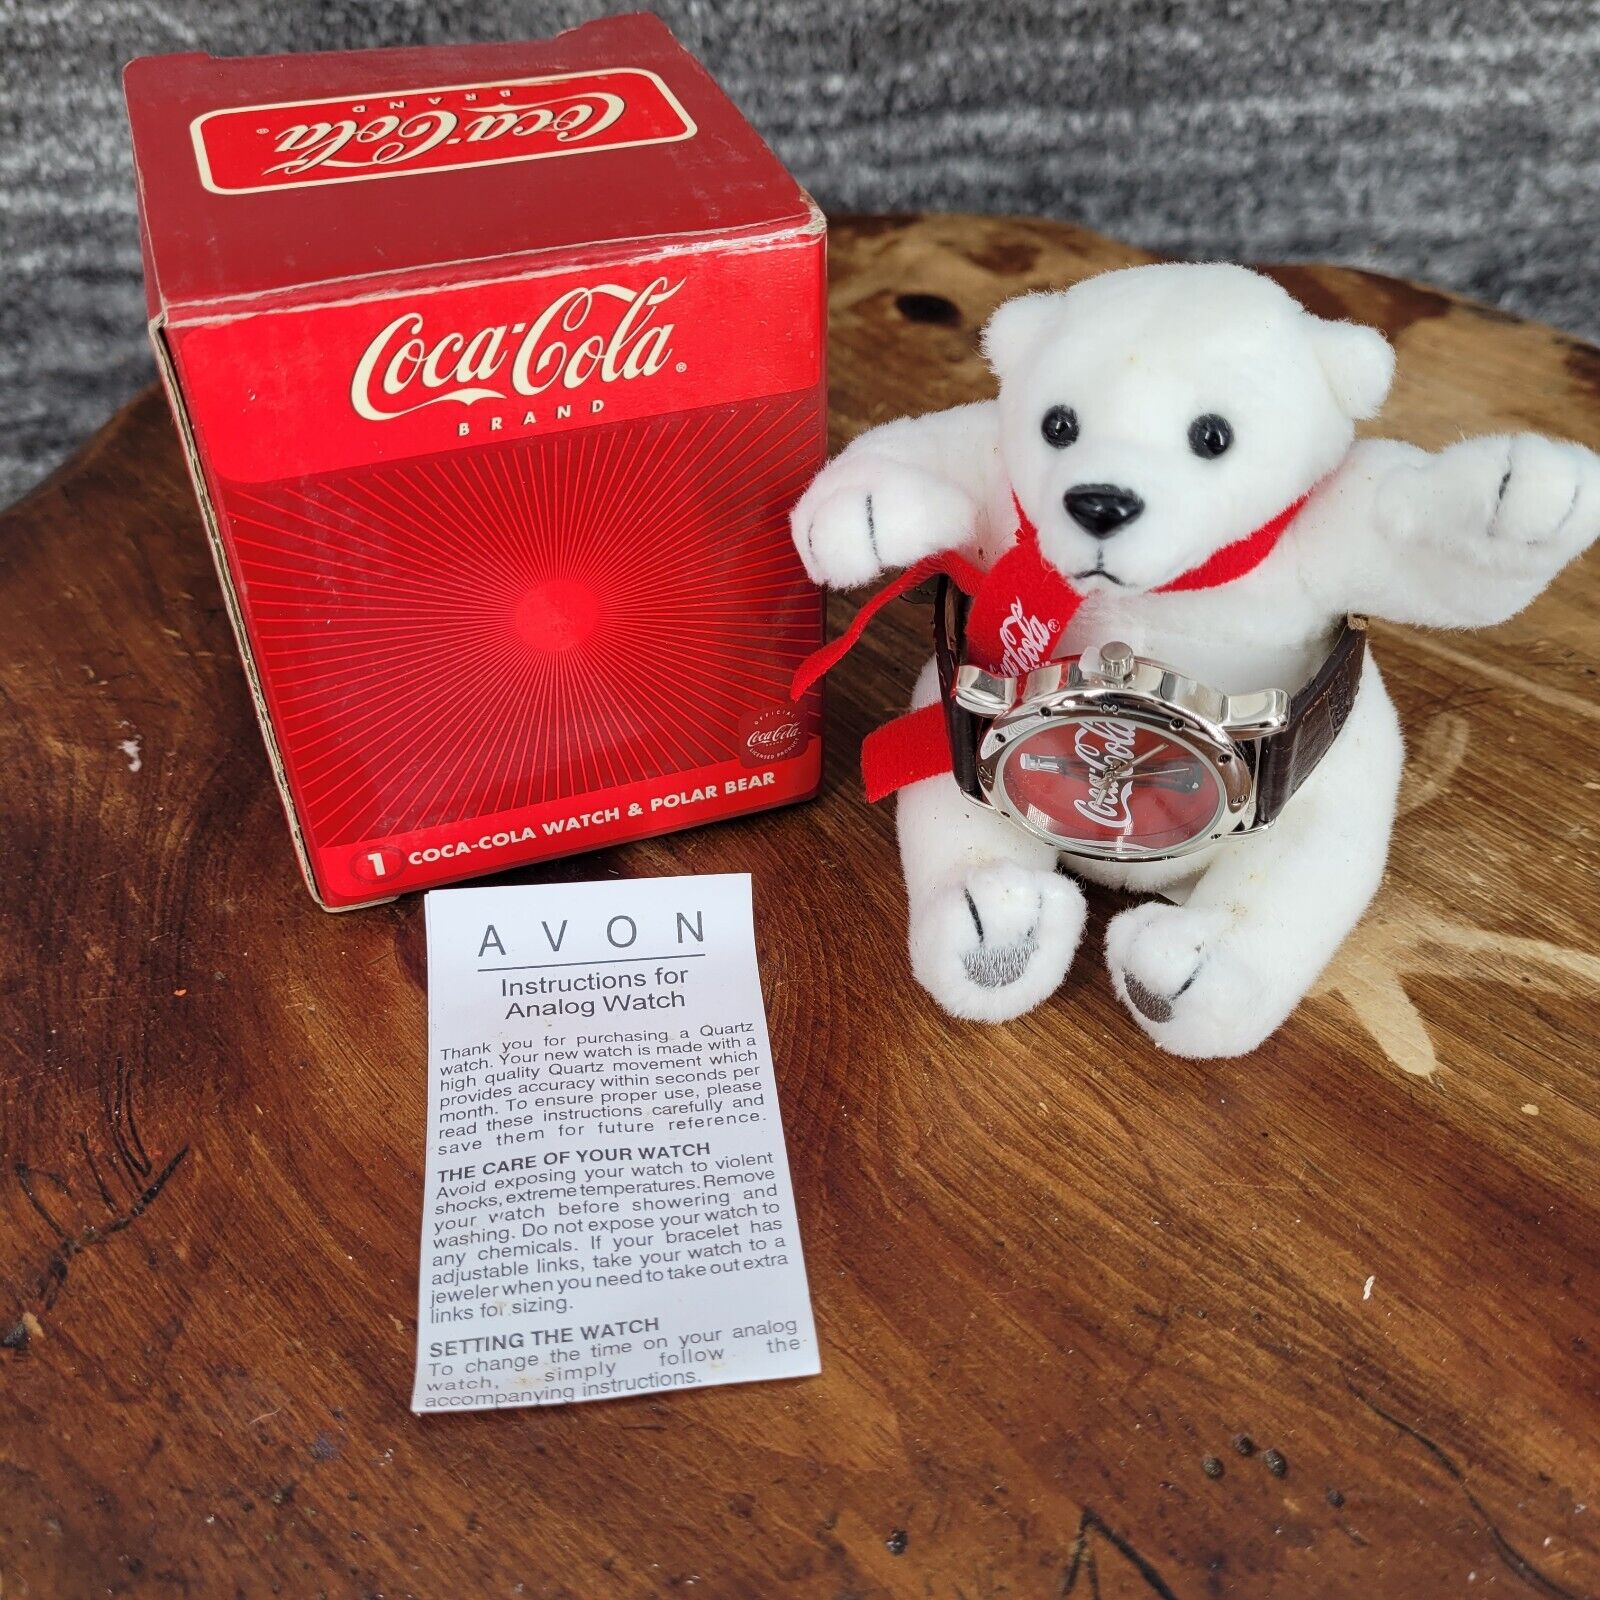 Coke Coca Cola Brand Watch & Polar Bear in Box Avon New Old Stock